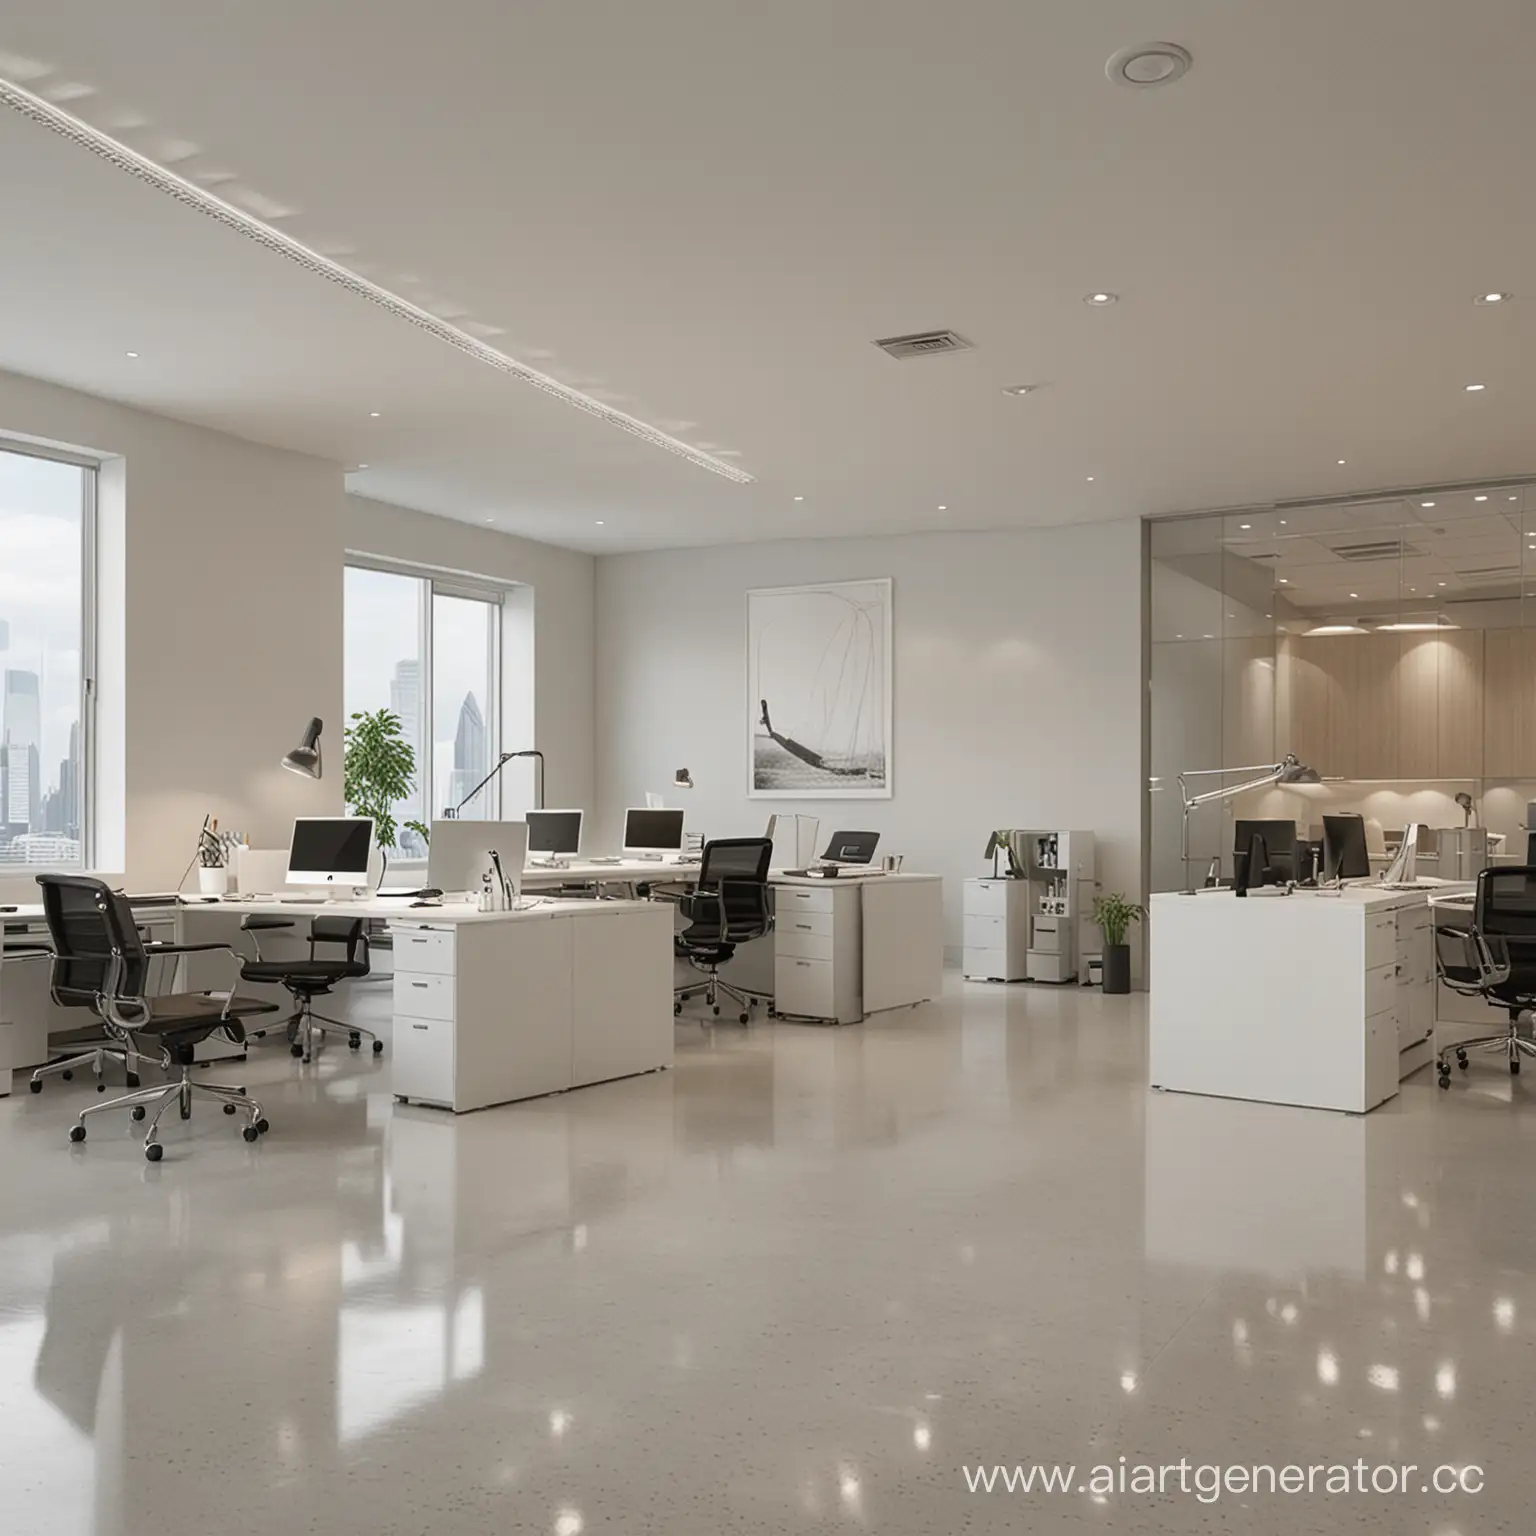 Modern-Office-Interior-with-Bright-Lighting-and-Minimalist-Design